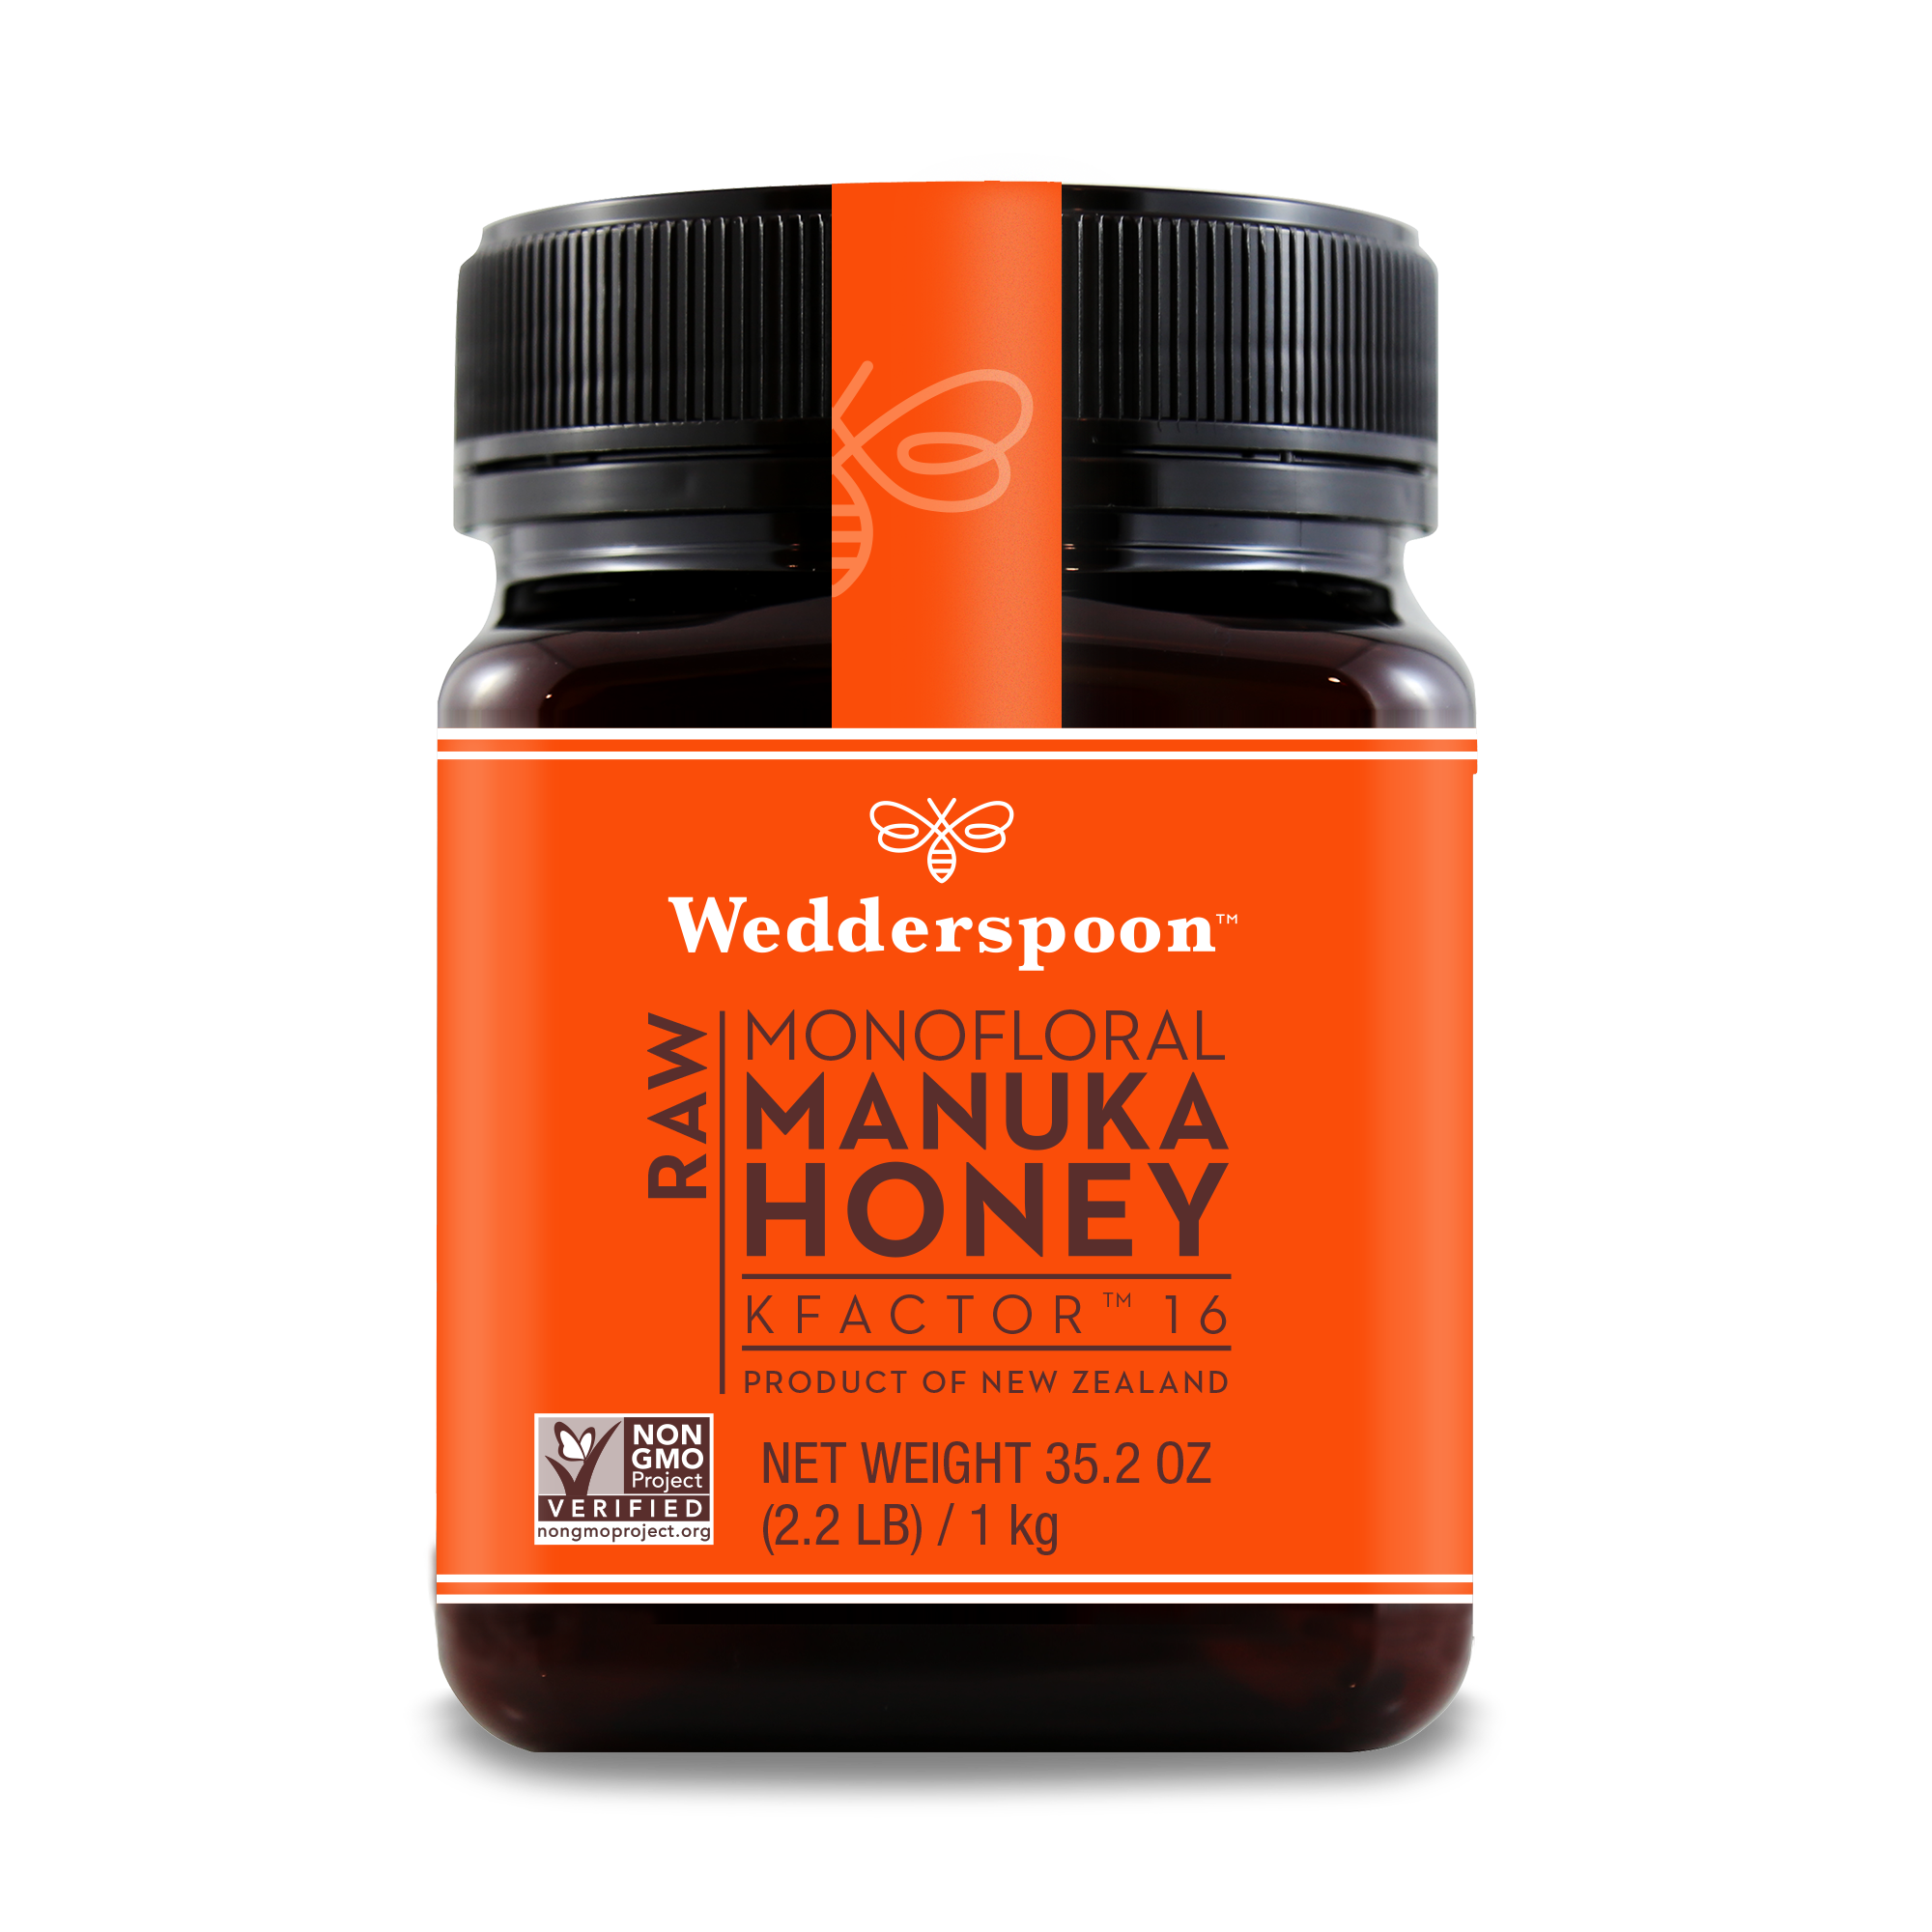 Raw Monofloral Manuka Honey KFactor 16, 1,000g, 1kg